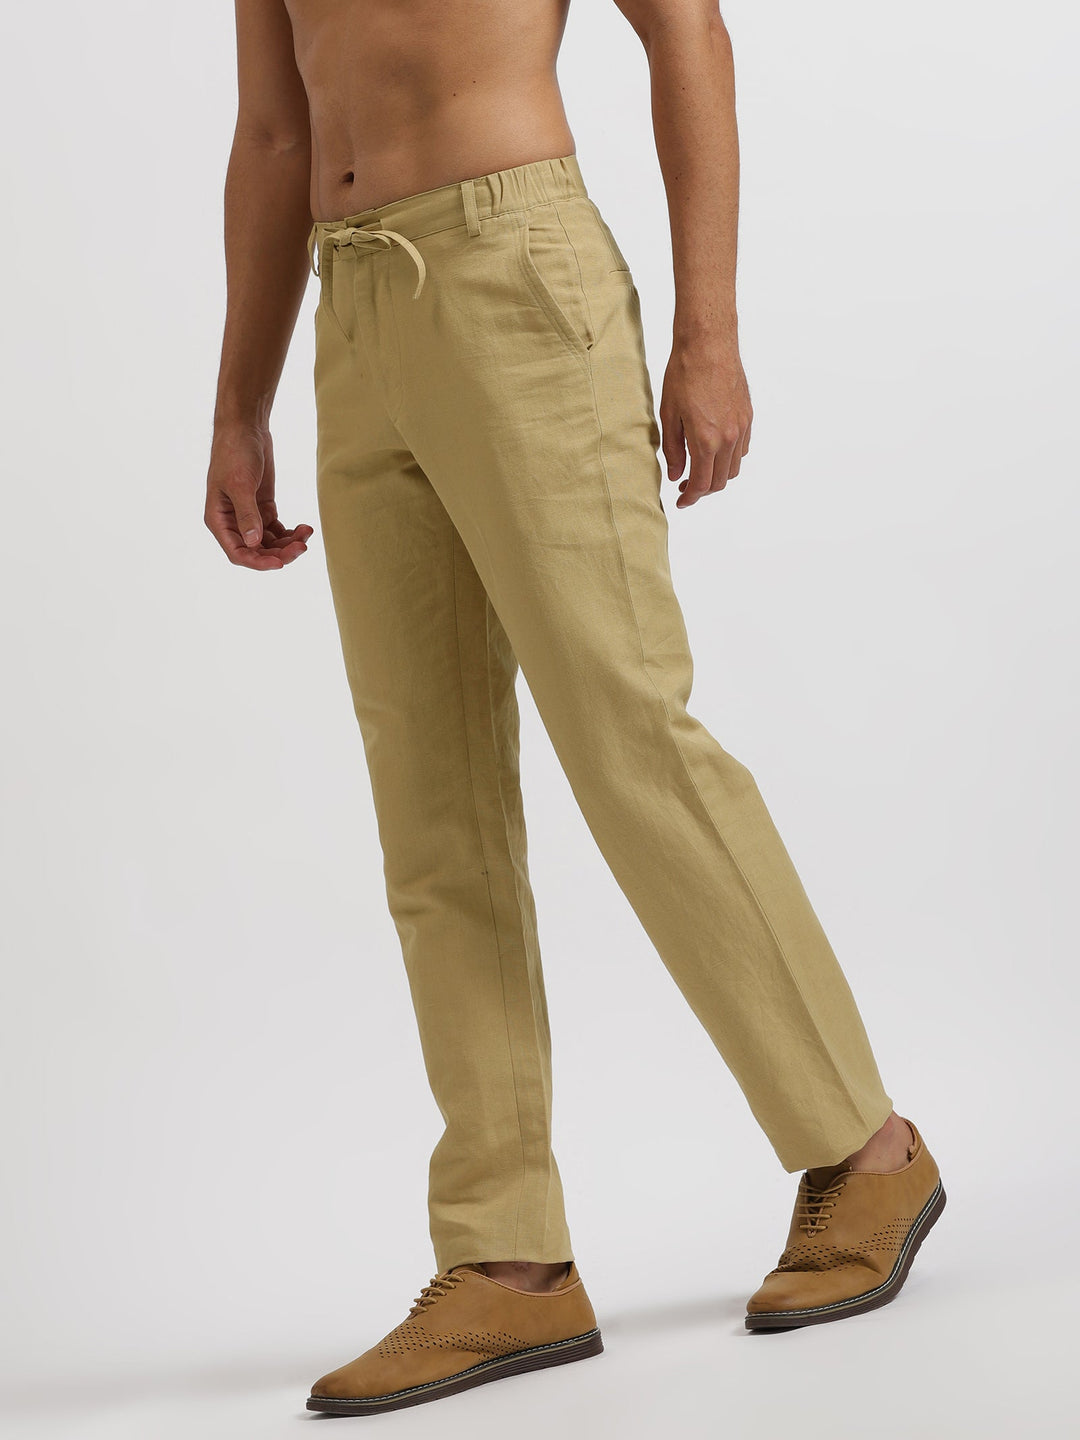 Theo - Linen Travel Pants - Khaki Yellow | Relove